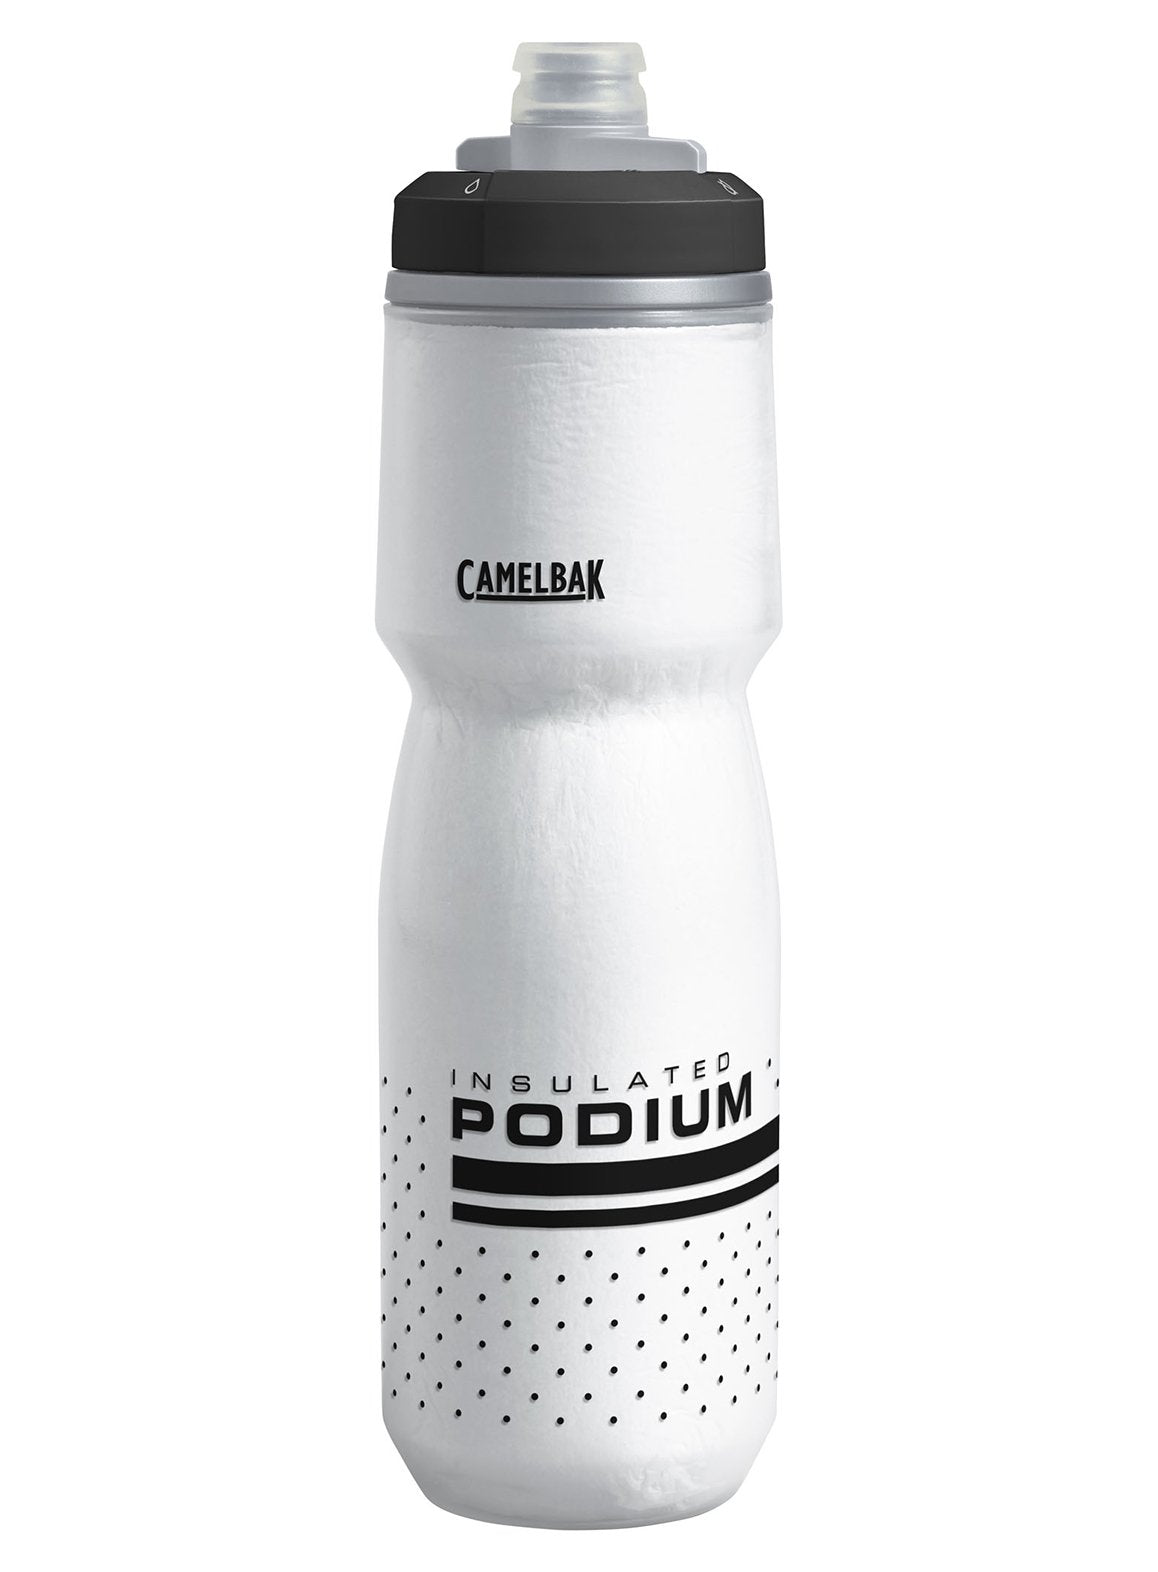 Camelbak Podium Chill Water Bottle - 24oz - White-Black - 2019 White - Black  